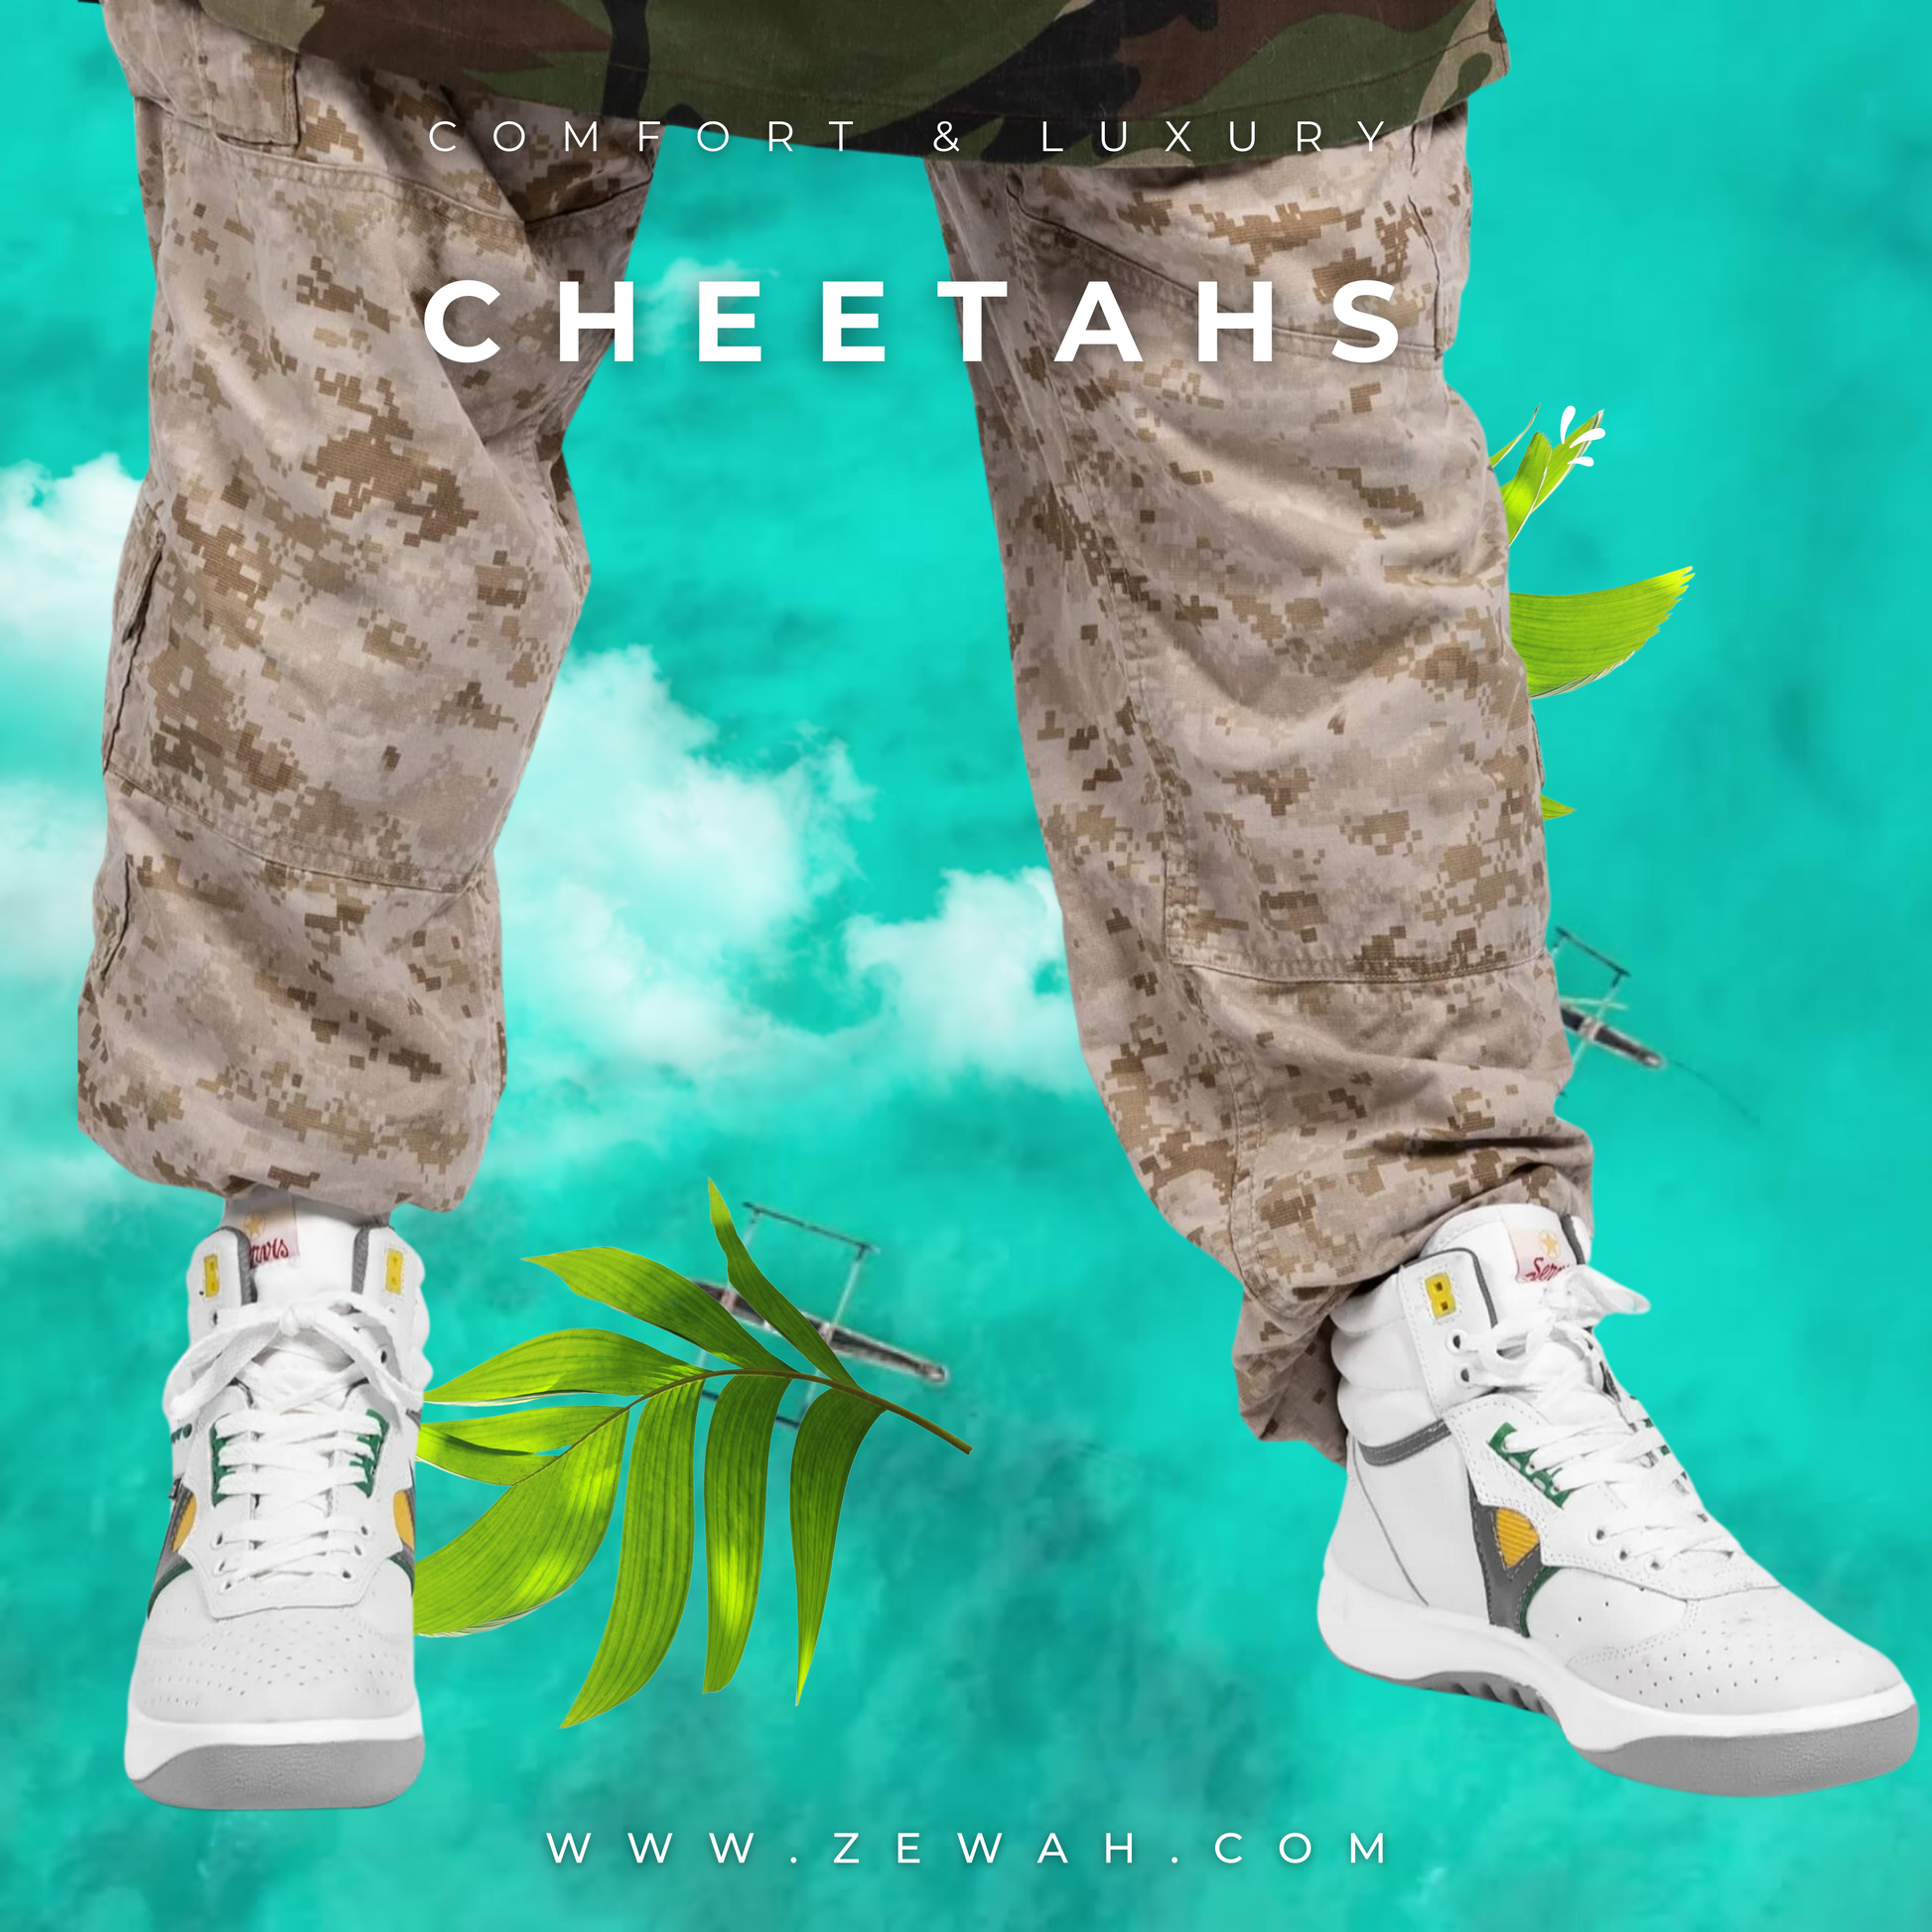 Servis Cheetahs CH-DI-0028 Sports Sneakers For Men CH-DI-0028, CH-DI-0028-Men Athleisure, Combat Boots, servis cheetah, servis cheetah 28, servis cheetah high top shoes, servis cheetah joggers, servis cheetah shoes, Servis Cheetahs  CH-DI-0028-Men Athleisure, Servis Cheetahs CH-DI-0028, Servis Cheetahs CH-DI-0028 Sports Shoes For Men, White Servis Cheetah High Top Sneakers